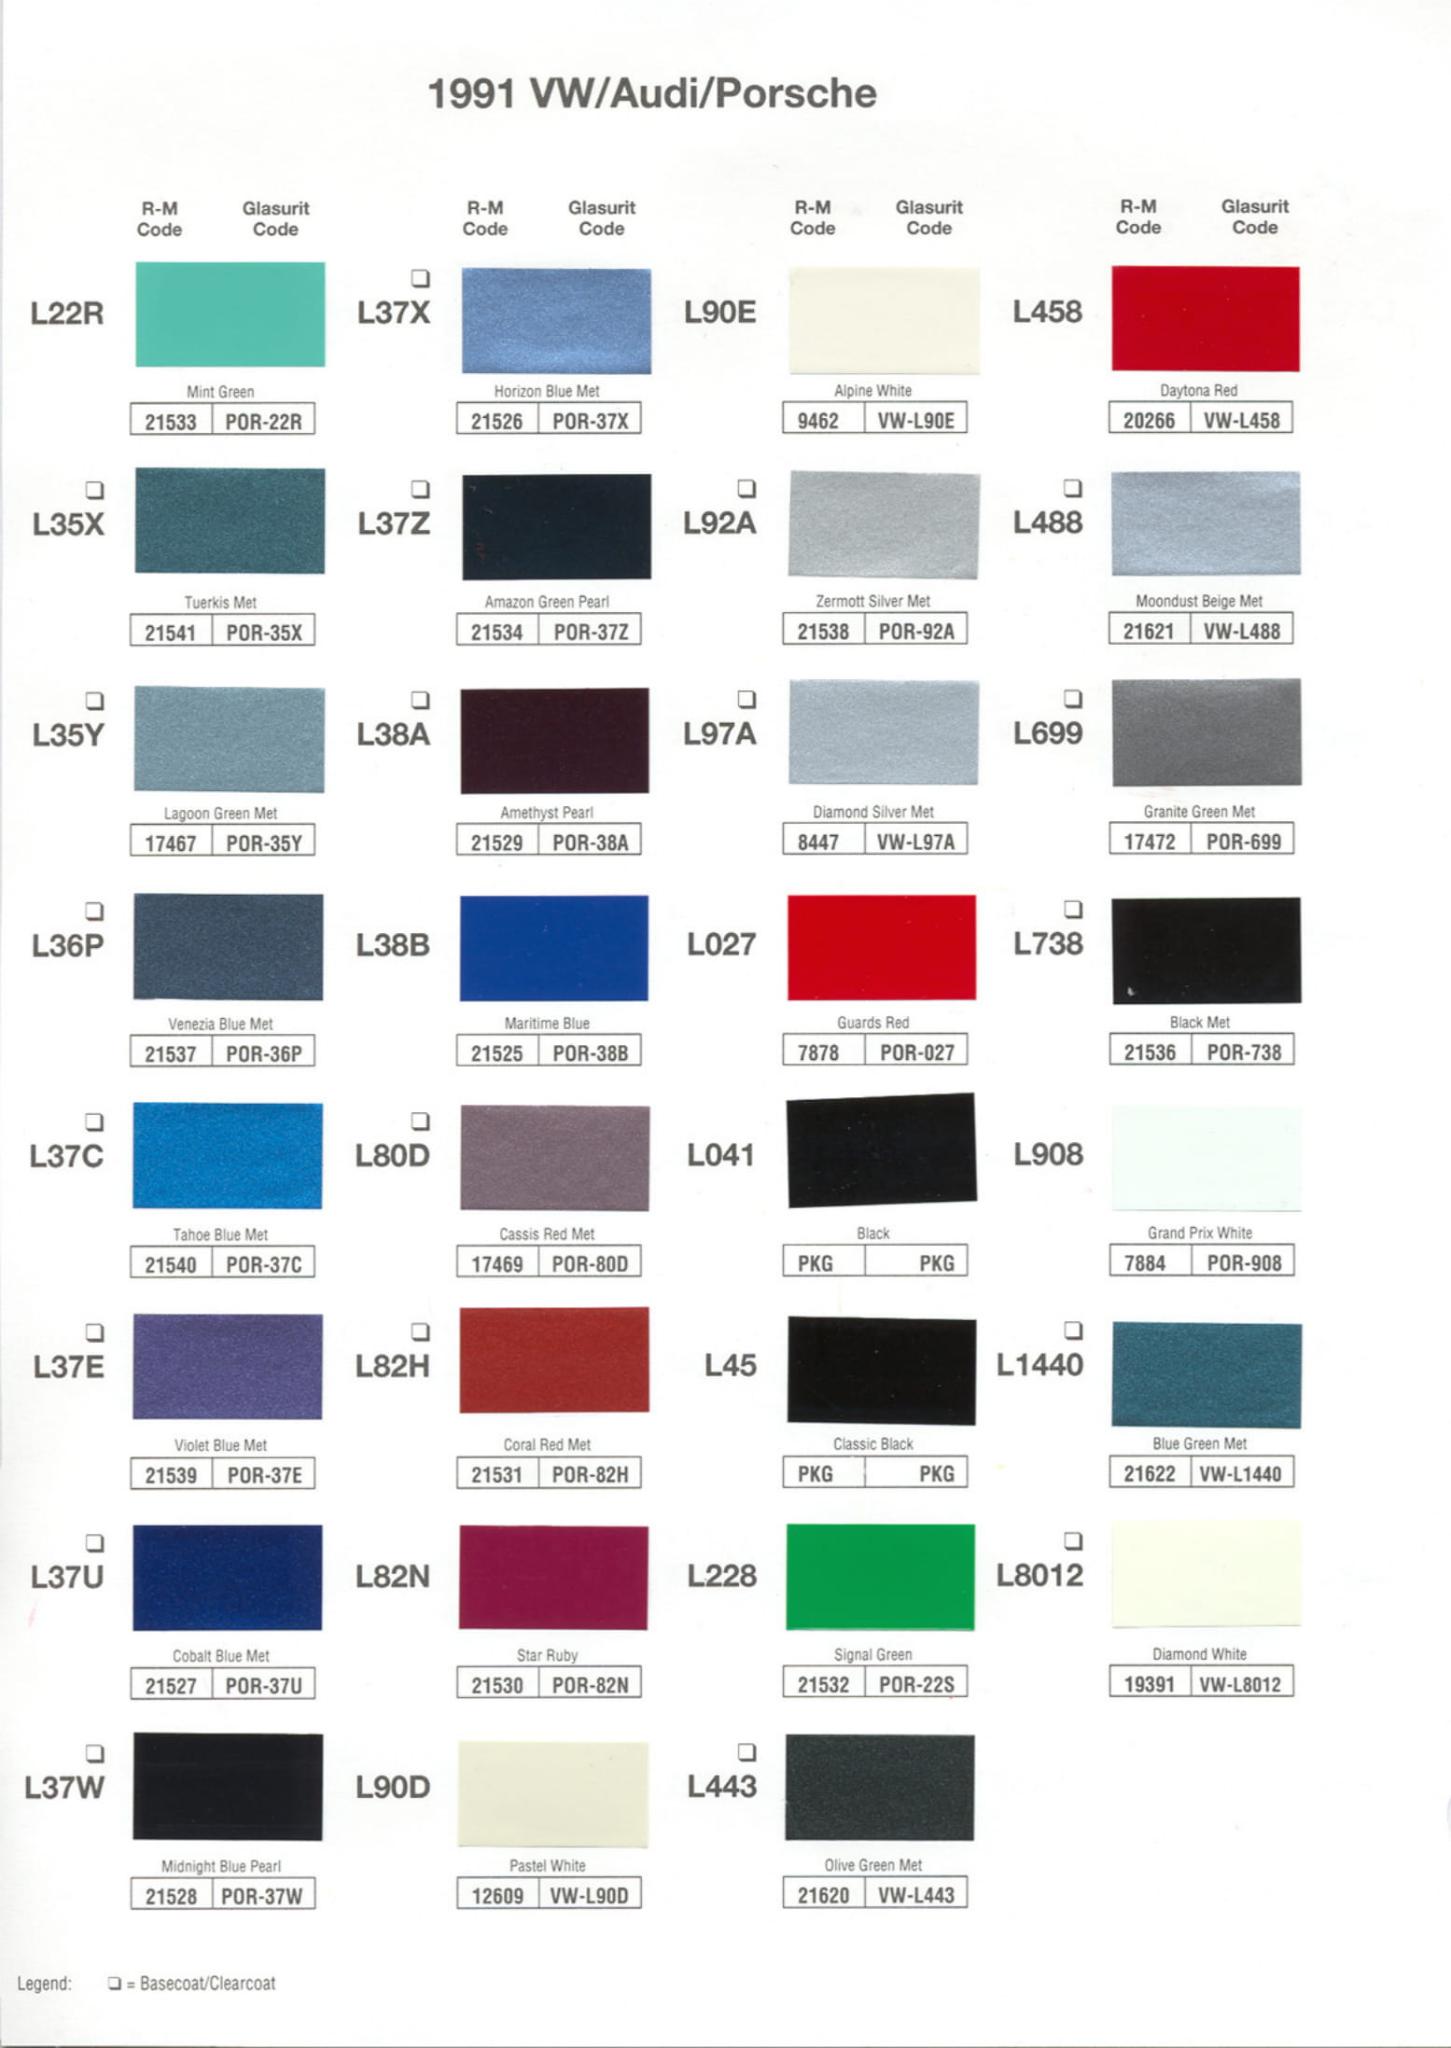 Exterior Colors and Paint Codes for Porsche Vehicles